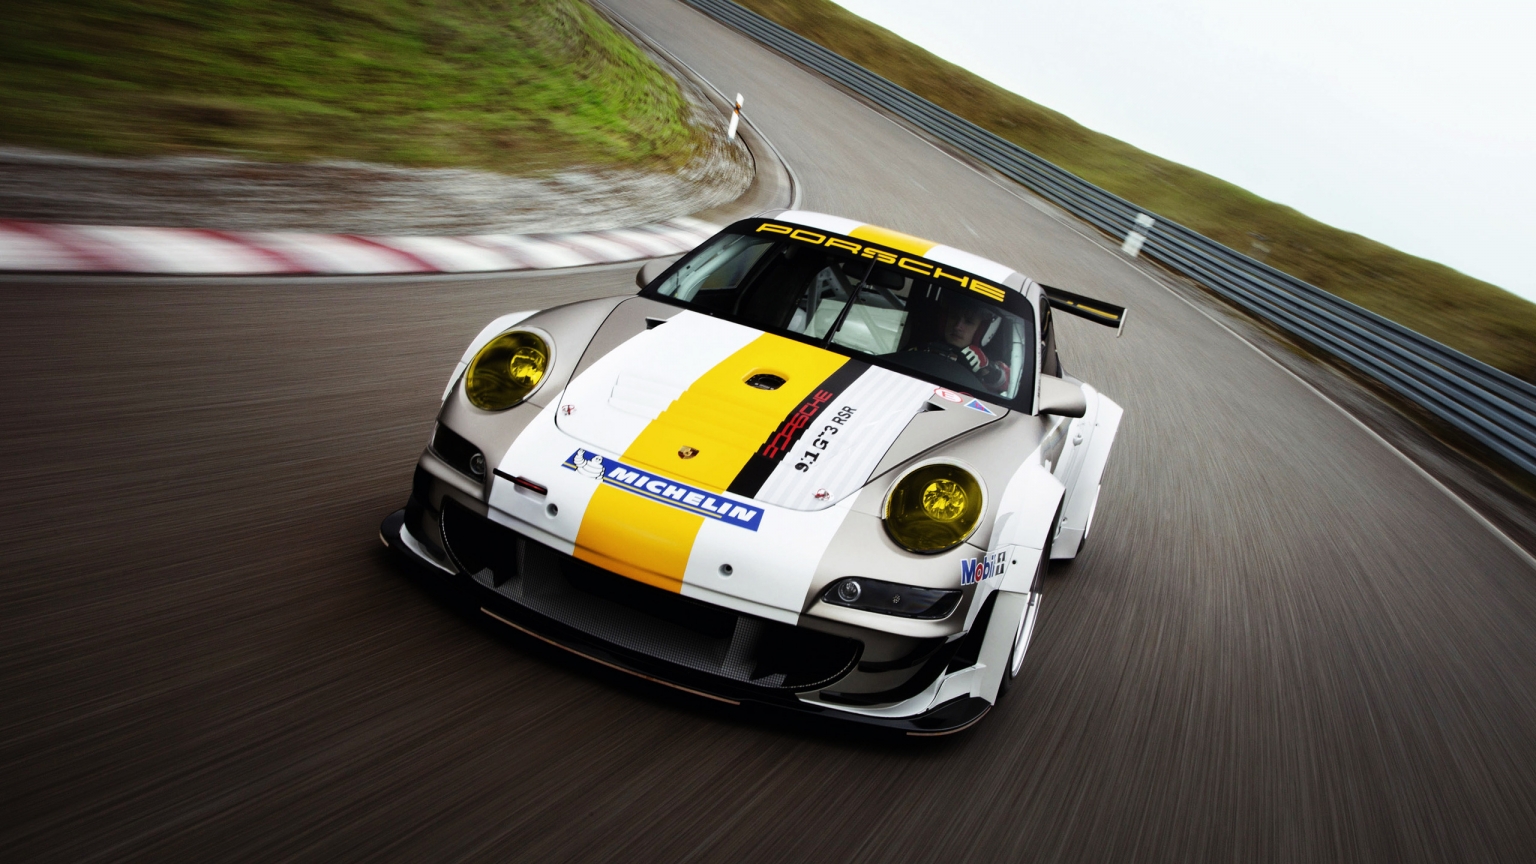 Porsche 911 GT3 RSR for 1536 x 864 HDTV resolution